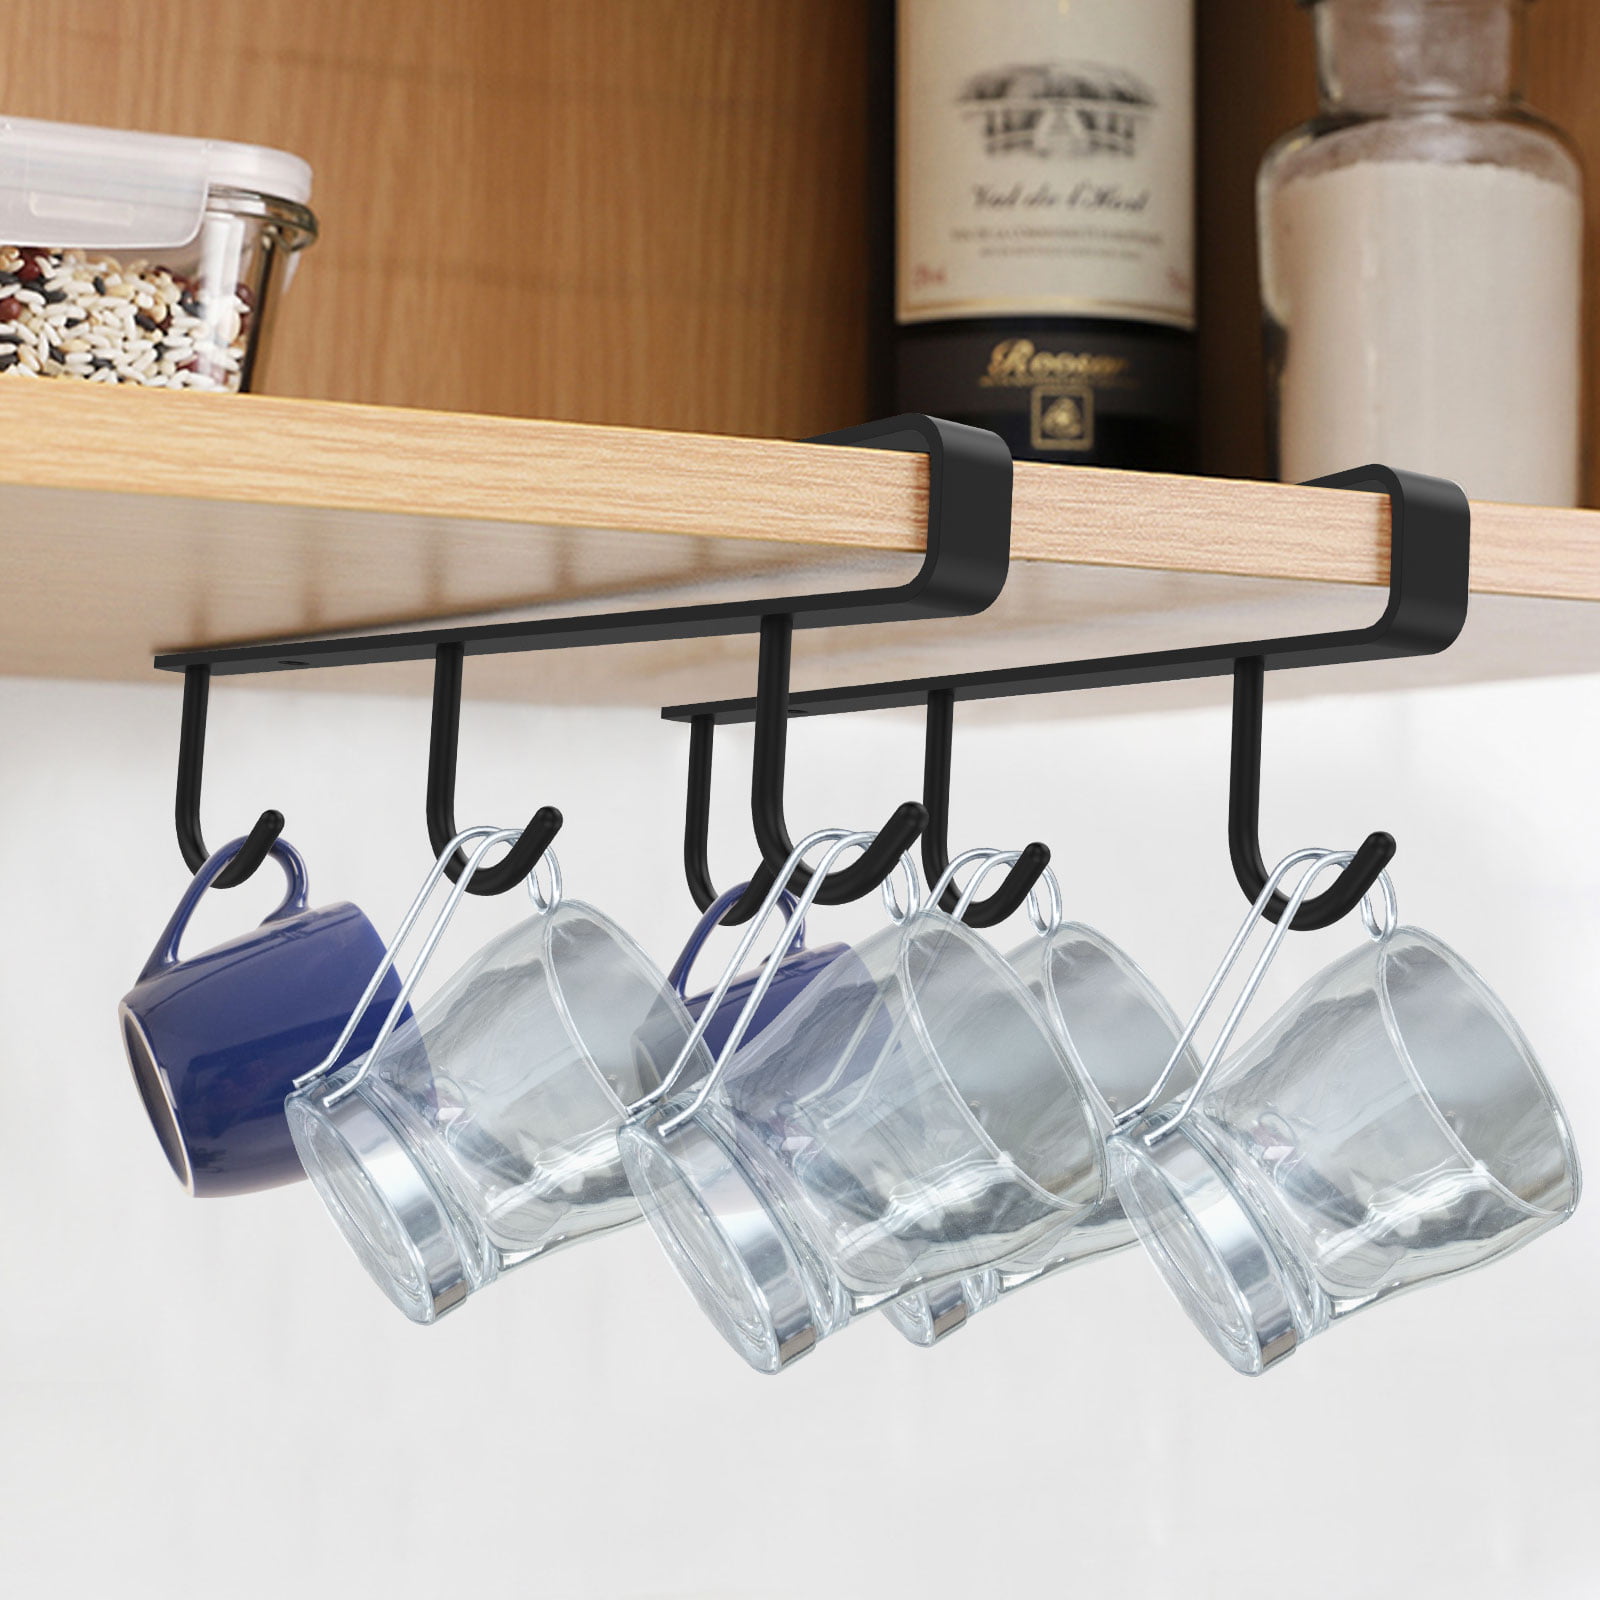 AliCH 2pcs Mug Hooks Under Cabinet Mug Holder Rack,Nail Free Adhesive  Coffee Cups Holder Hanger for Cups/Kitchen Utensils/Ties Belts/Scarf/Keys